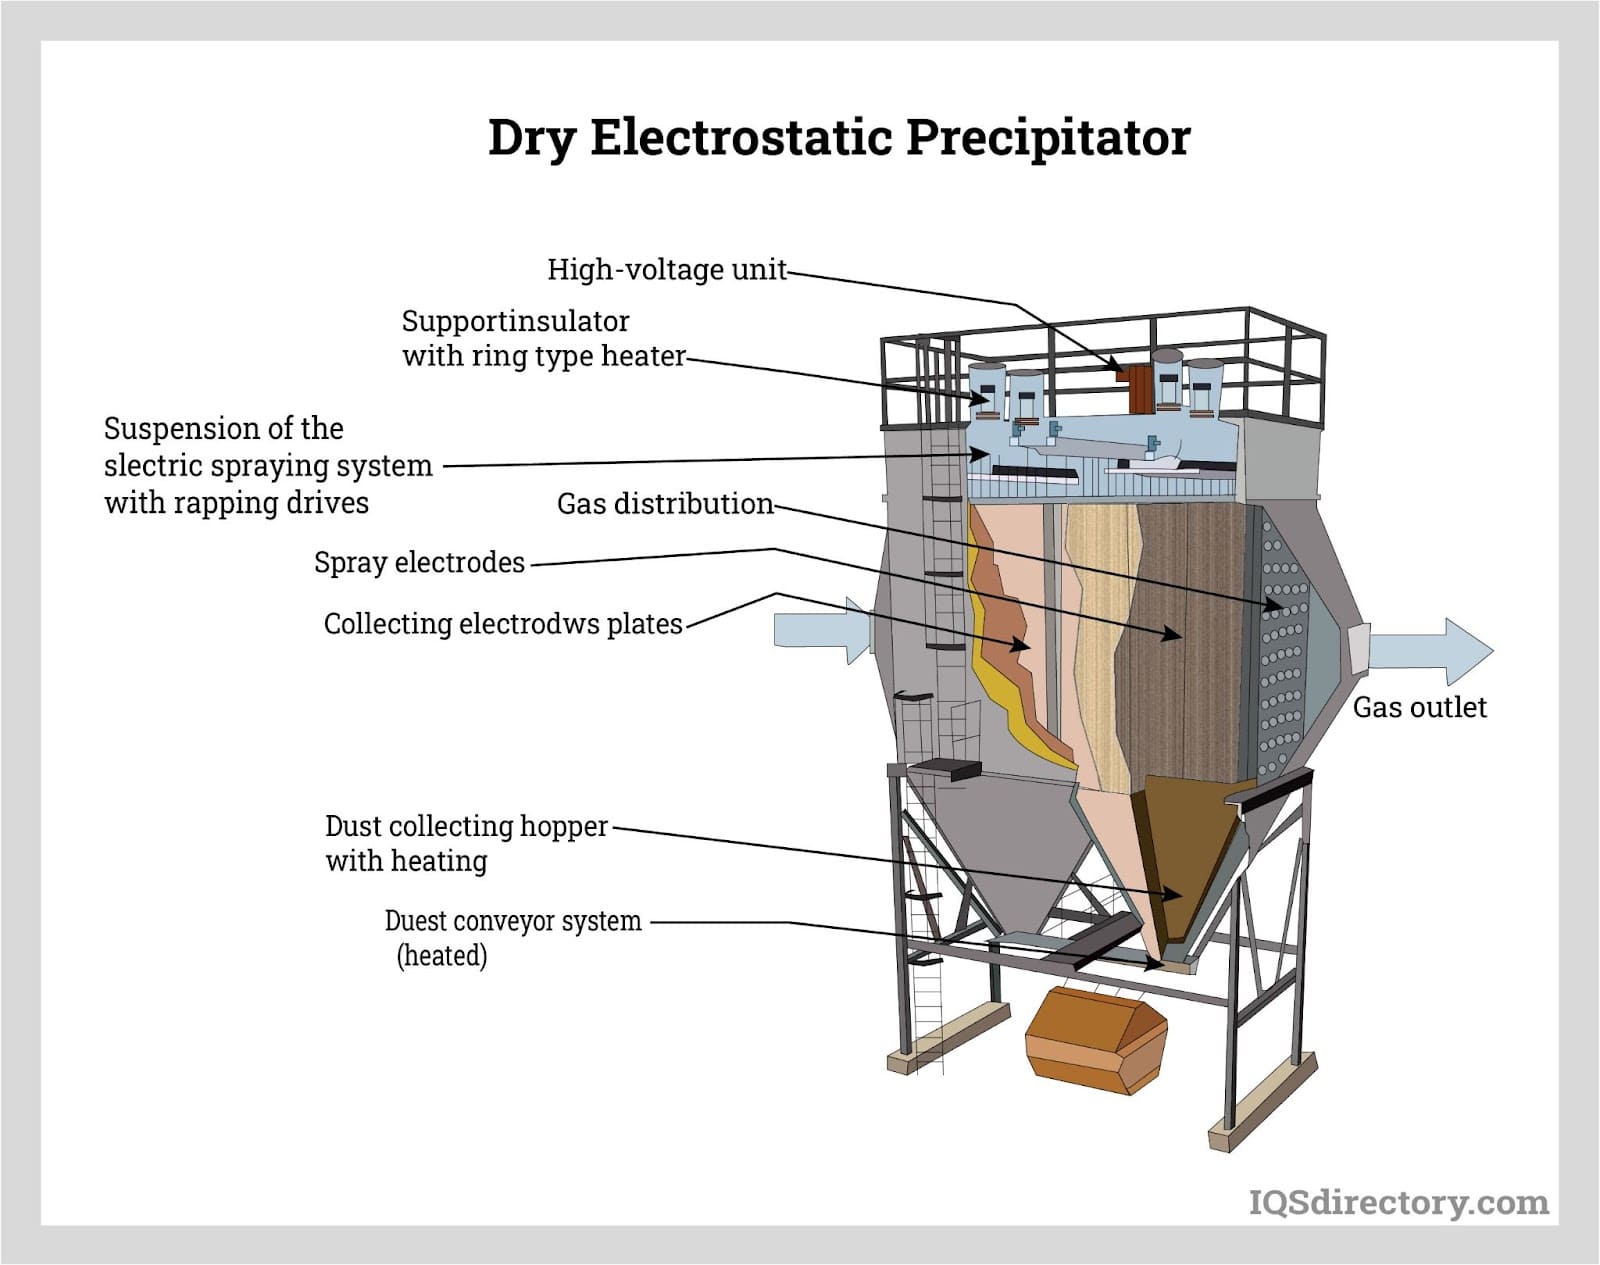 Dry Electrostatic Precipitator